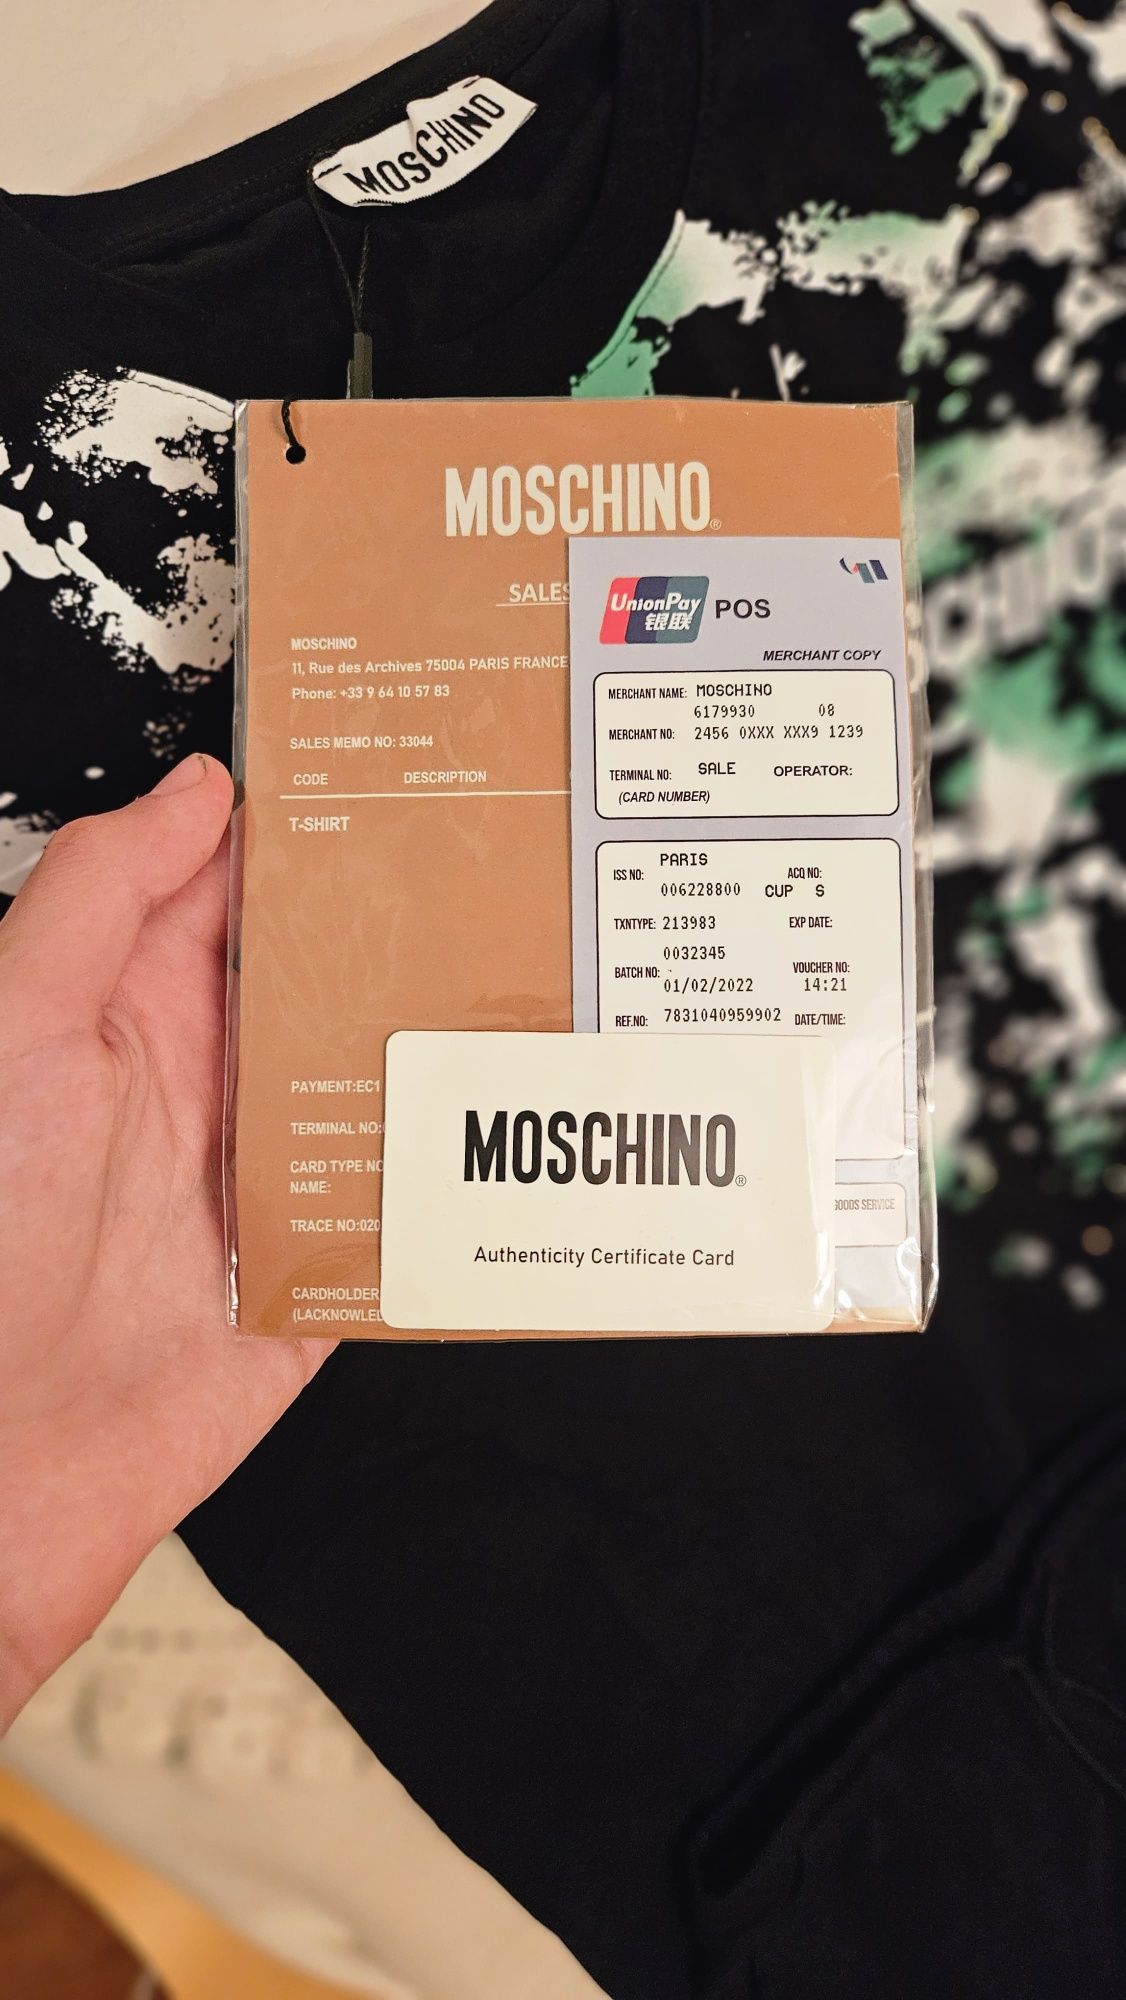 Compleu Moschino!Mărimi disponibile:S,M,L,XL,XXL